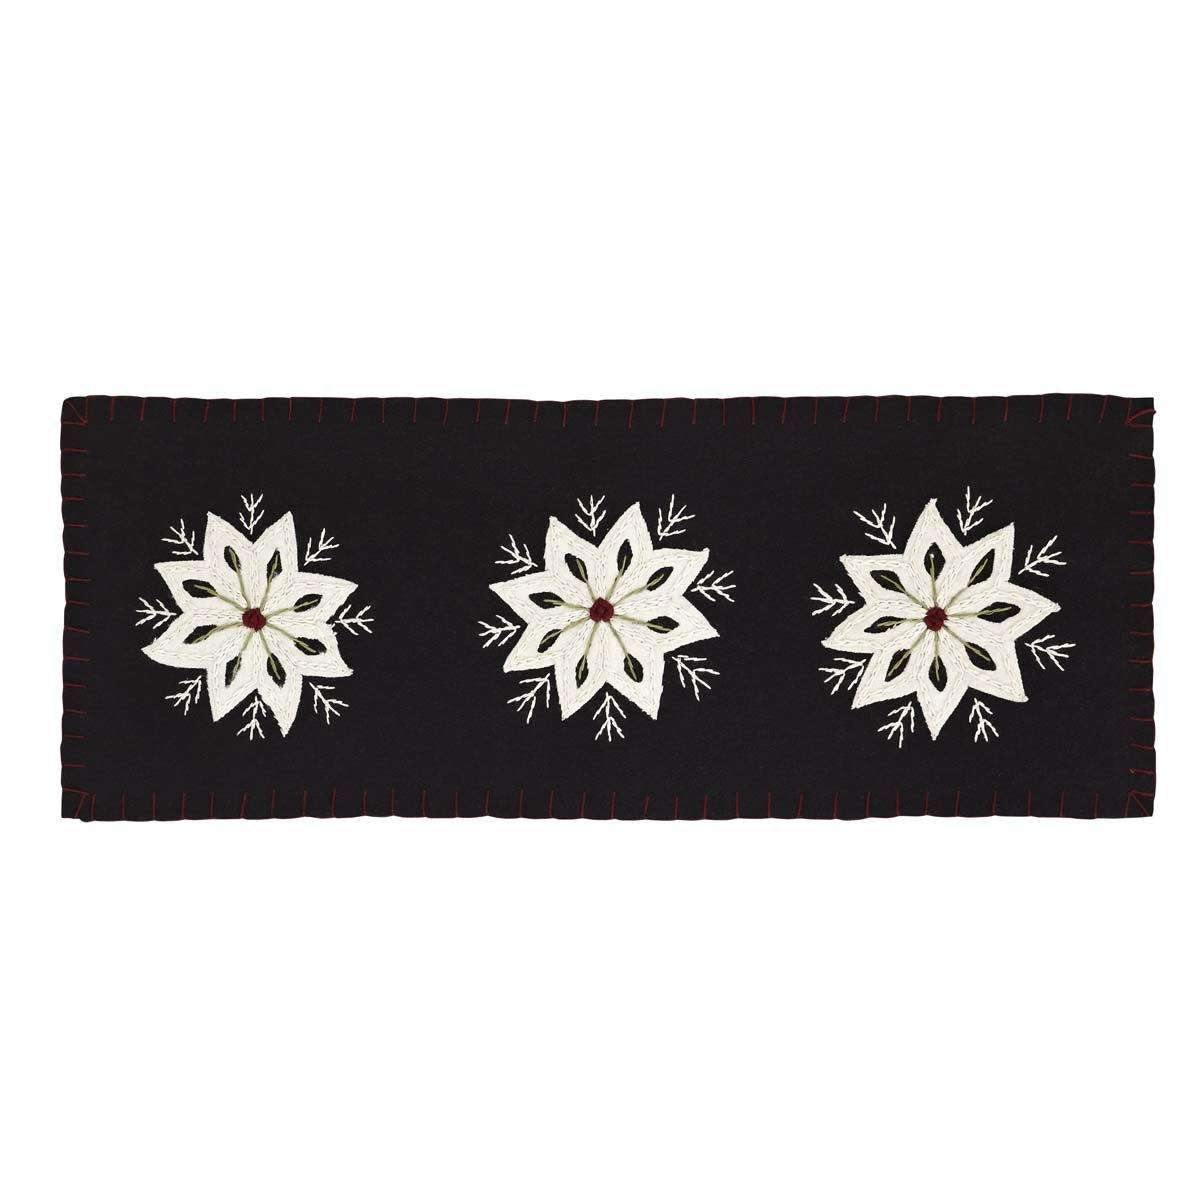 Christmas Snowflake Runner Felt Embroidery 8x24 VHC Brands - The Fox Decor